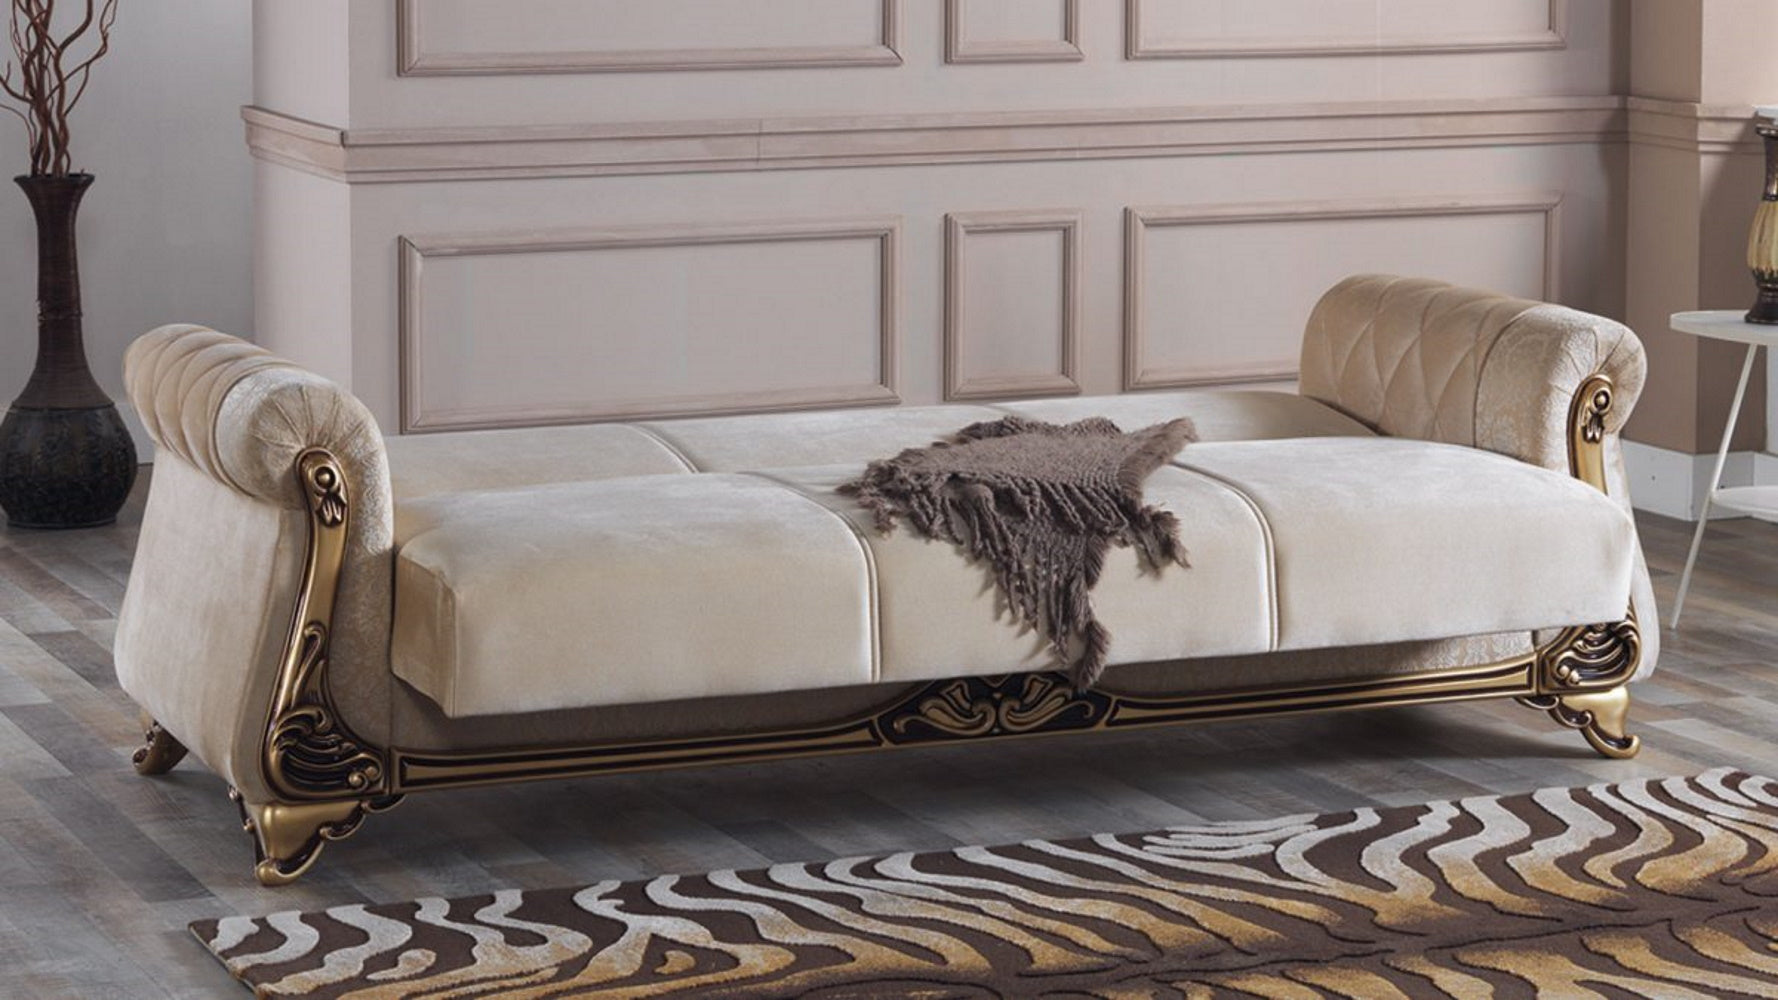 Harmony Convertible Livingroom (2 Sofa & 2 Chair) Khaki Beige